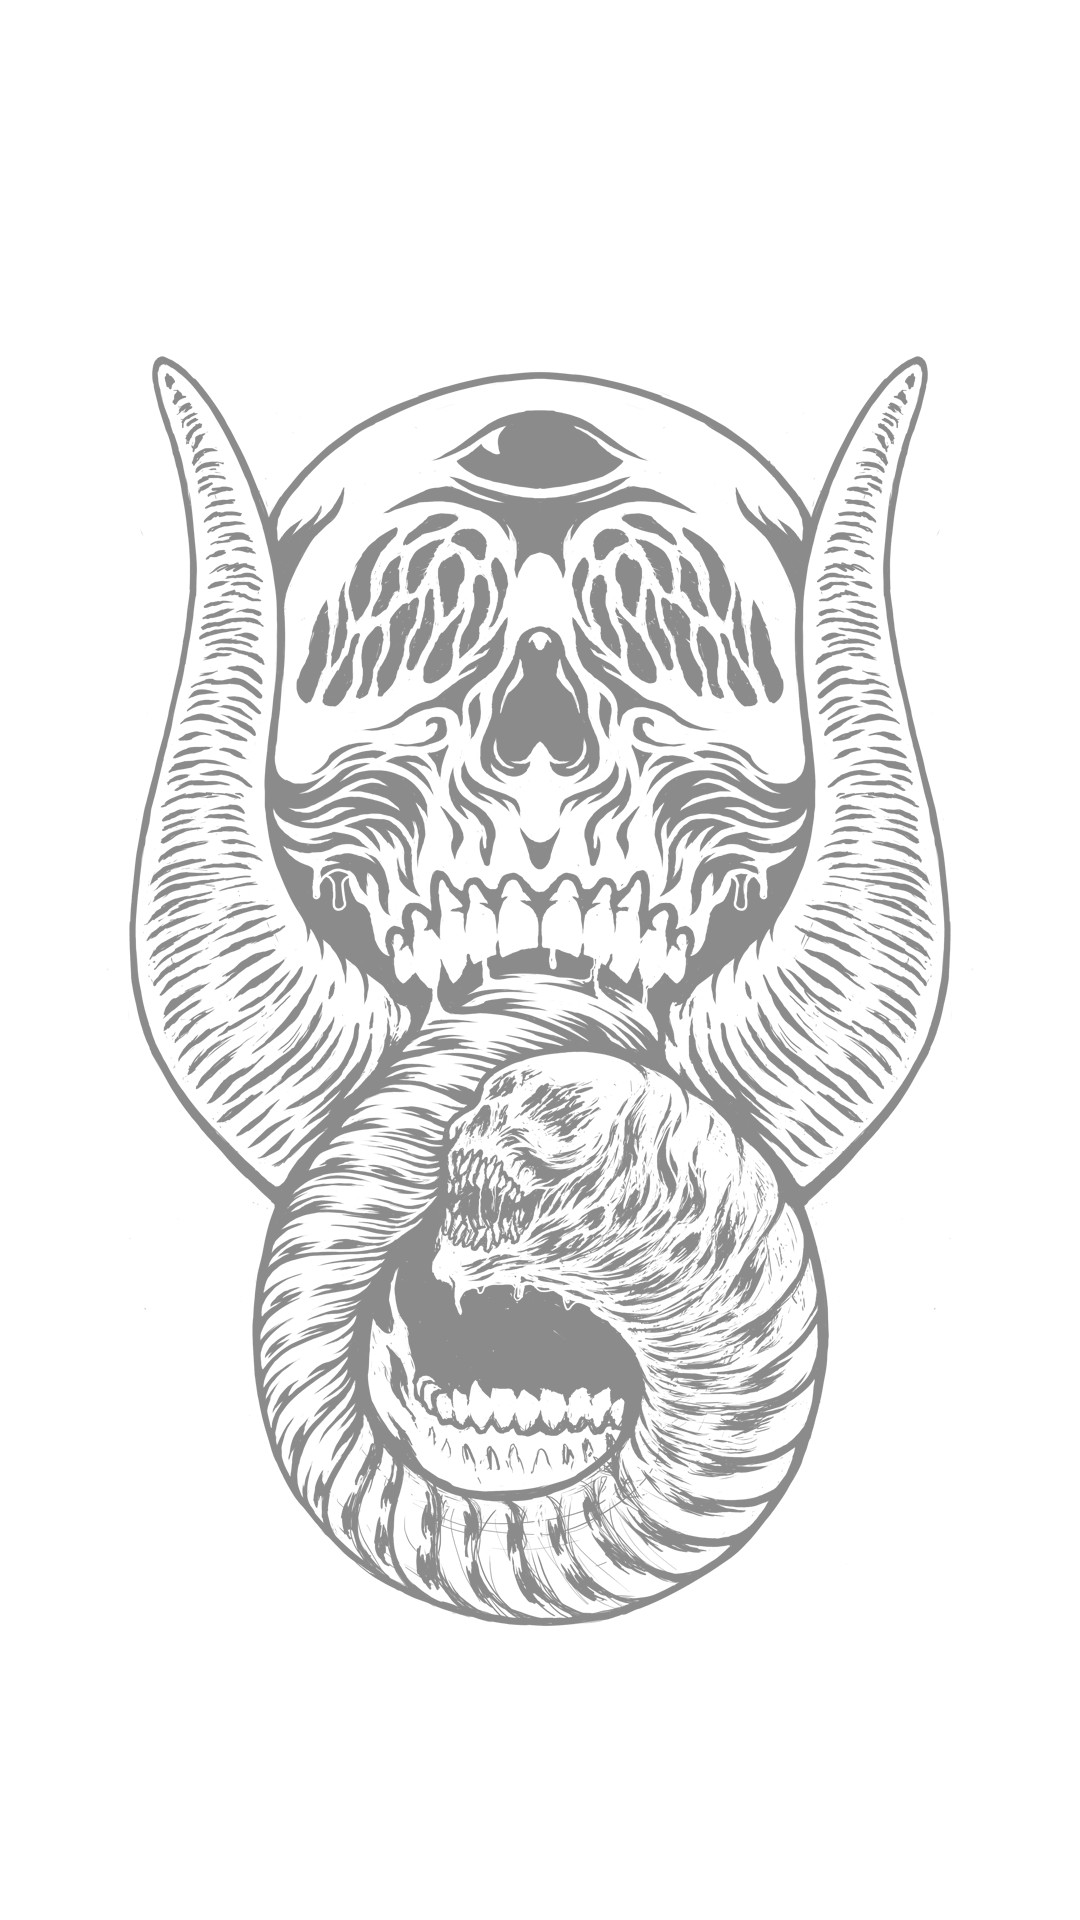 band shirt design dark art death death metal heavy metal merch designs occult art skul art skull t shirt design